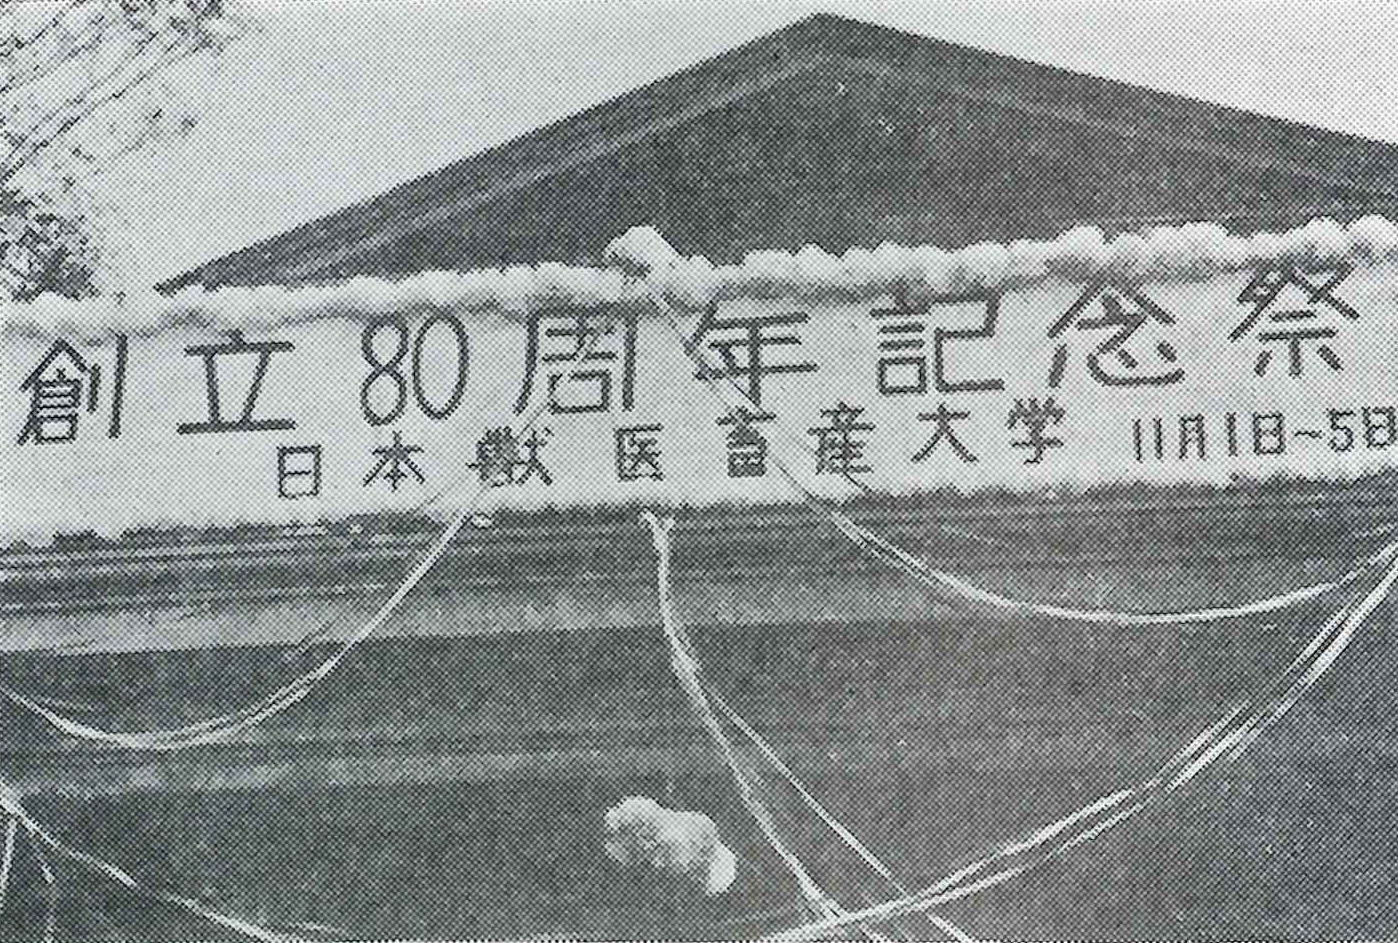 昭和42年頃の航空写真